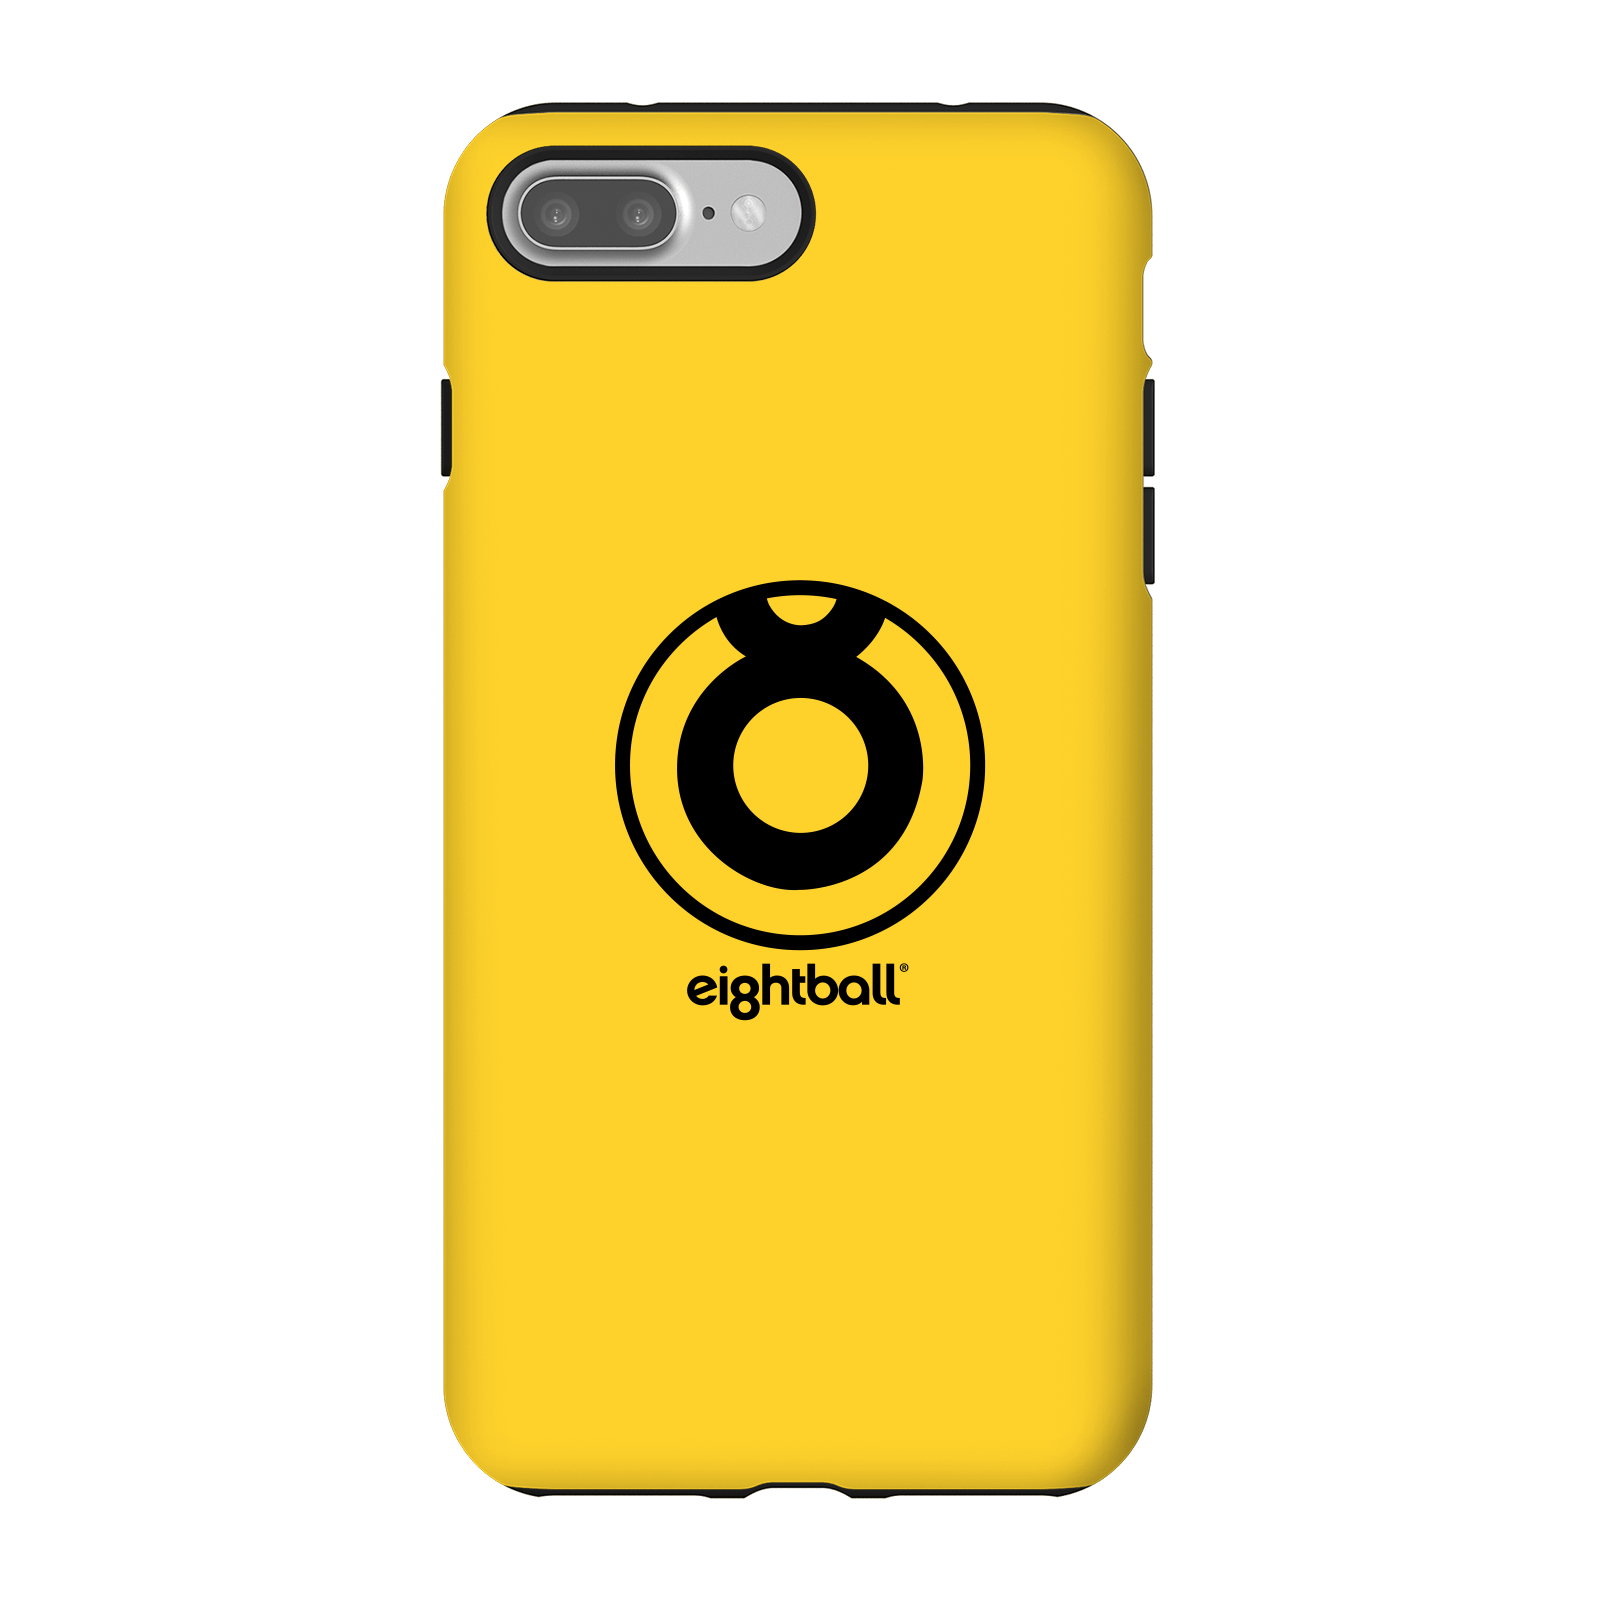 Funda Móvil Ei8htball Large Circle Logo para iPhone y Android - iPhone 7 Plus - Carcasa doble capa - Brillante